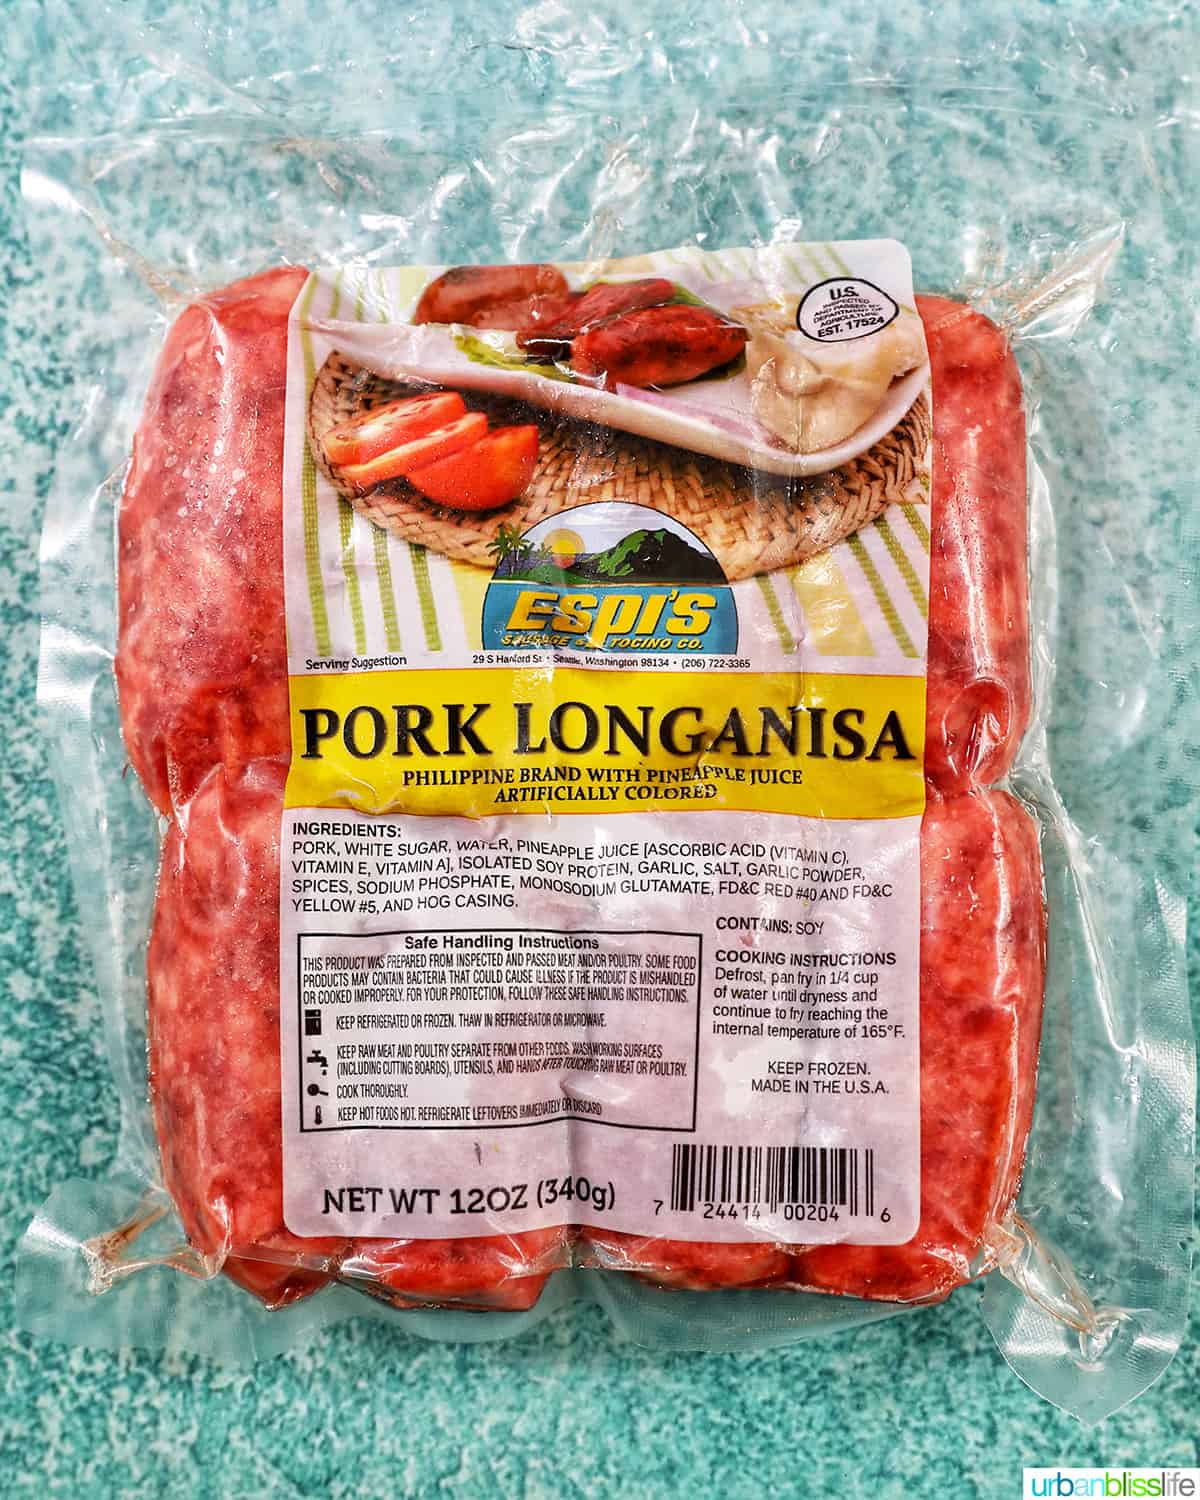 packaged Longanisa, Filipino pork sausage, on a blue table.